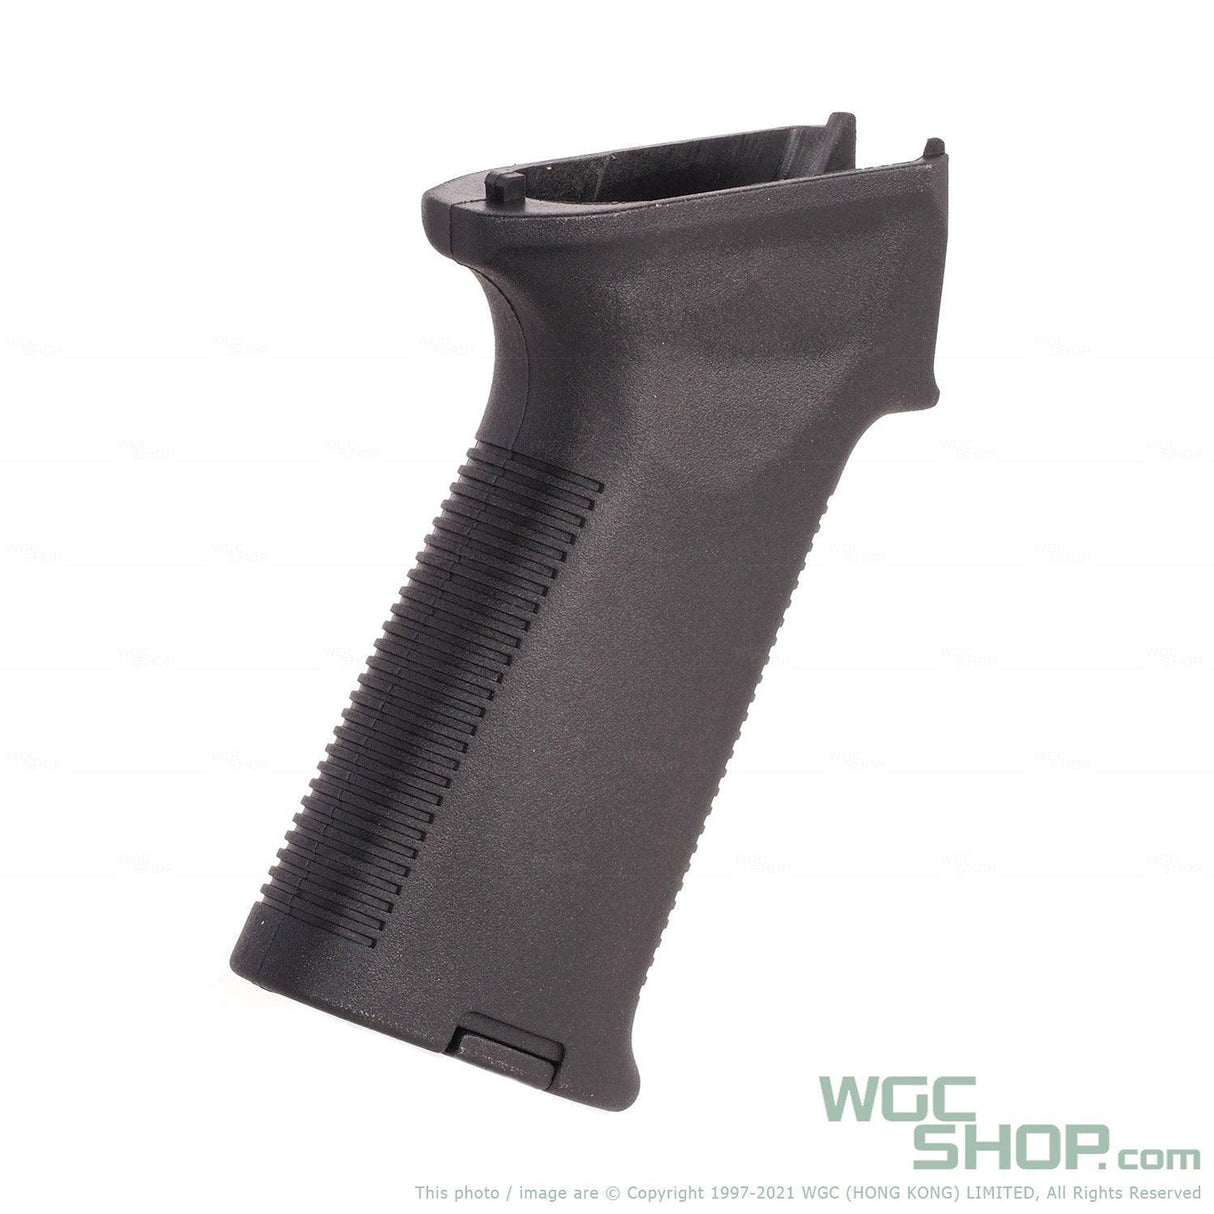 DMAG AK Tactical Pistol Grip for AEG - WGC Shop